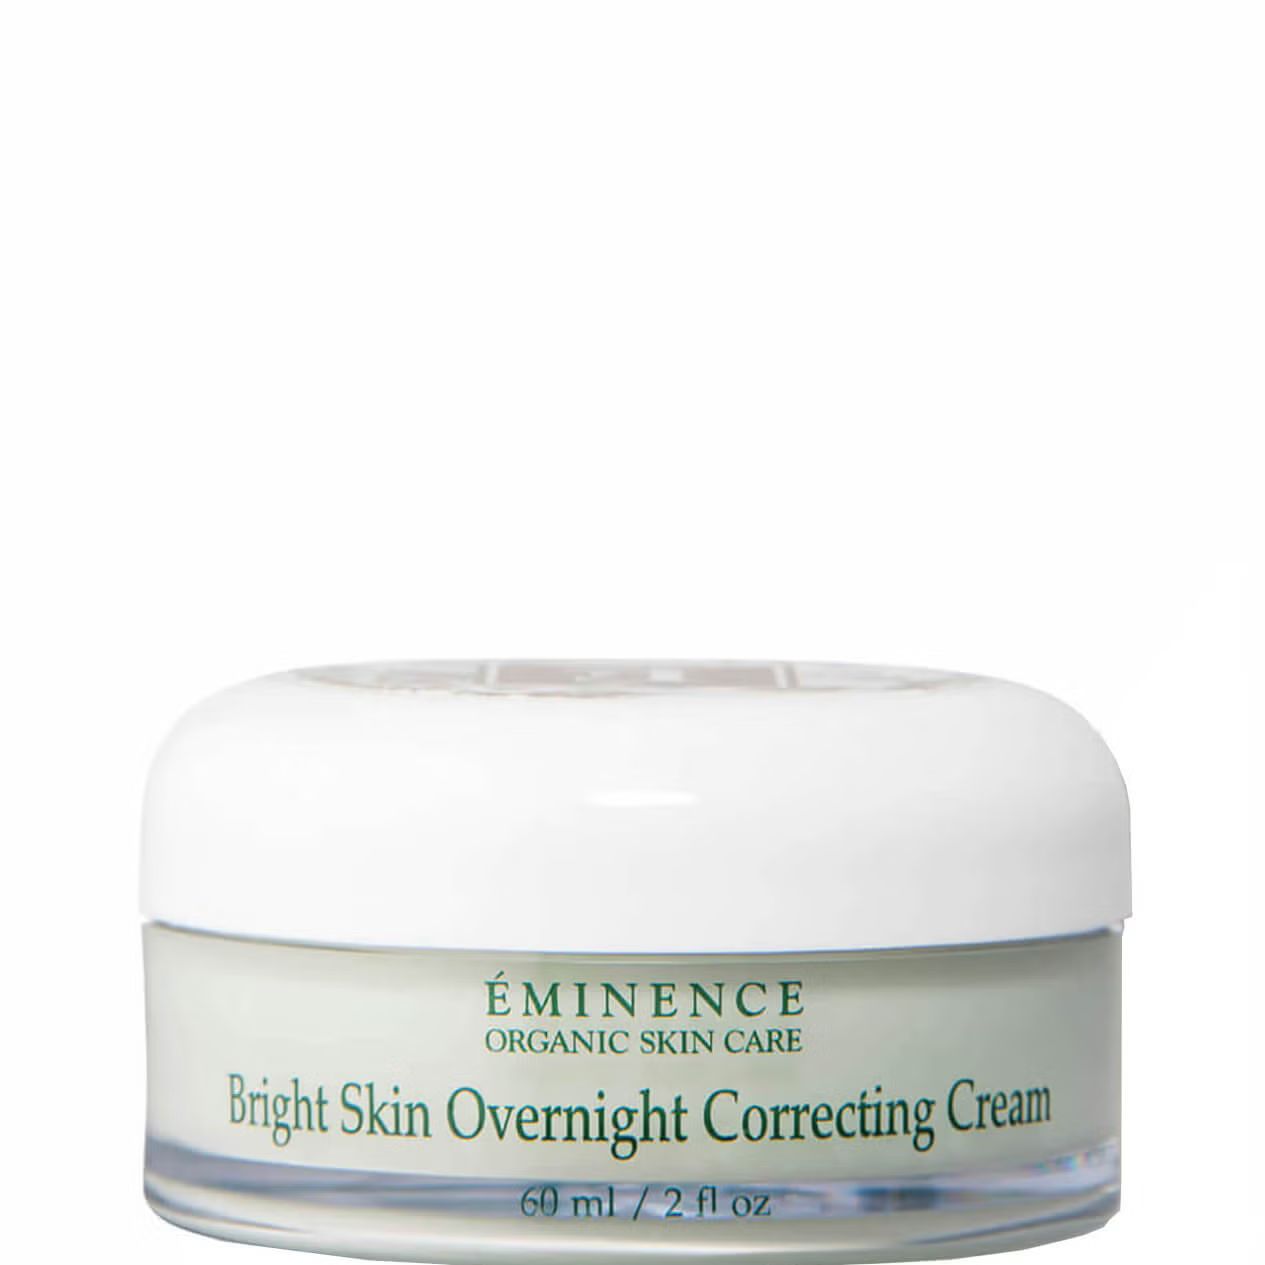 Eminence Organic Skin Care Bright Skin Overnight Correcting Cream 2 fl. oz | Dermstore